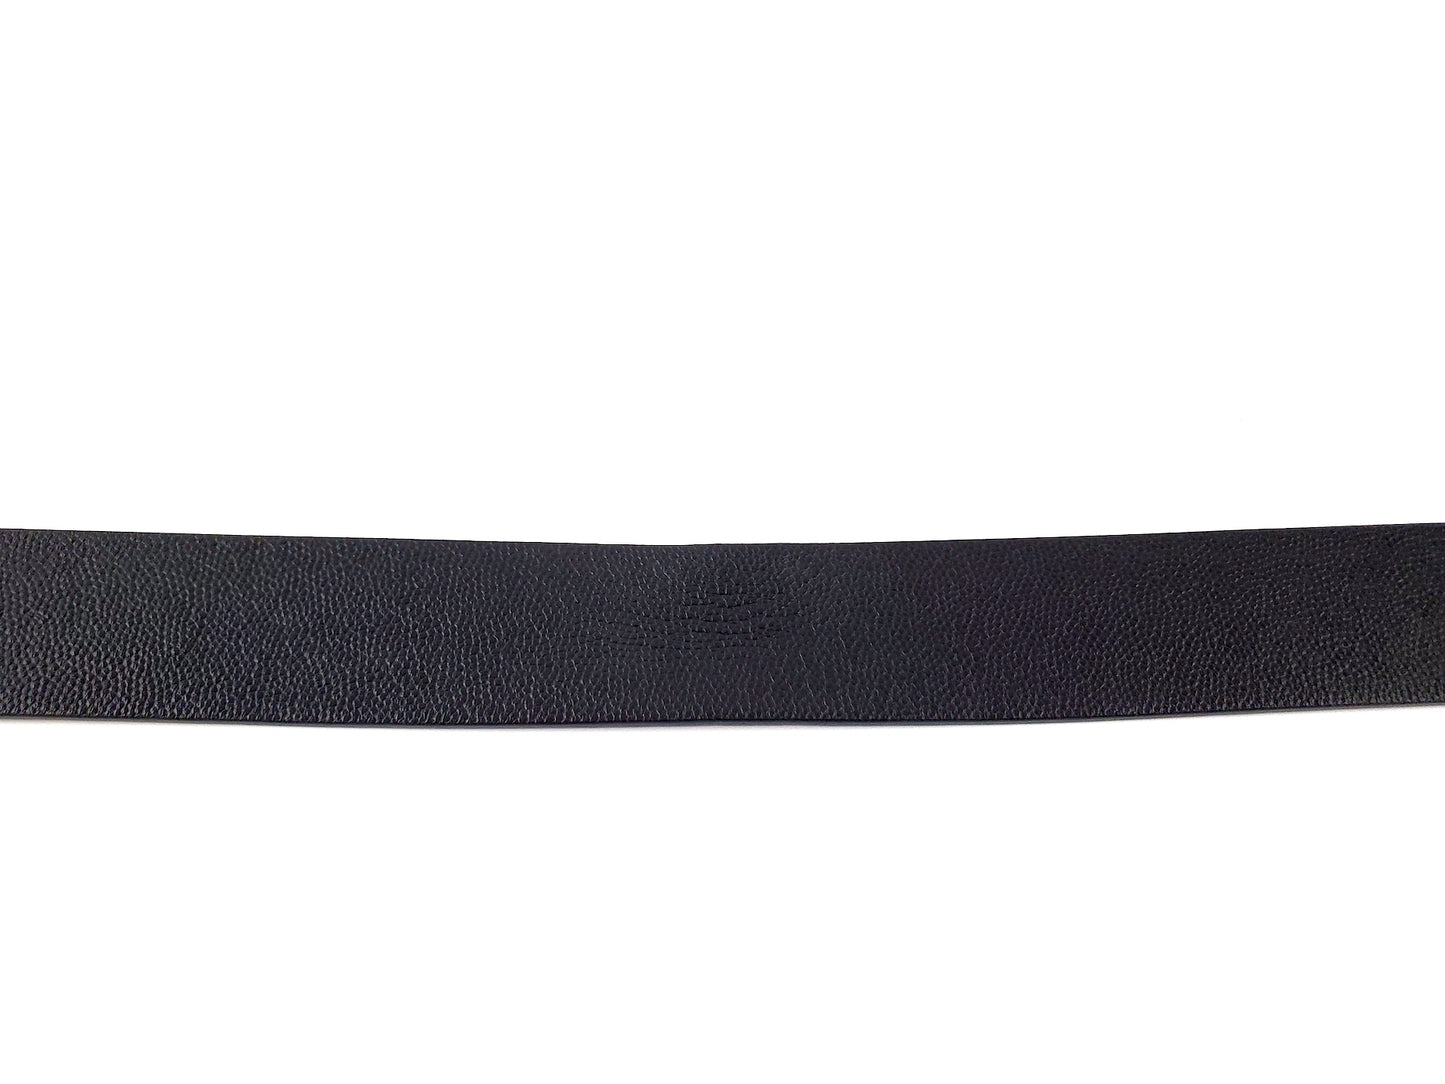 CHANEL 2020 Interlocking CC Logo Leather Belt 85 34